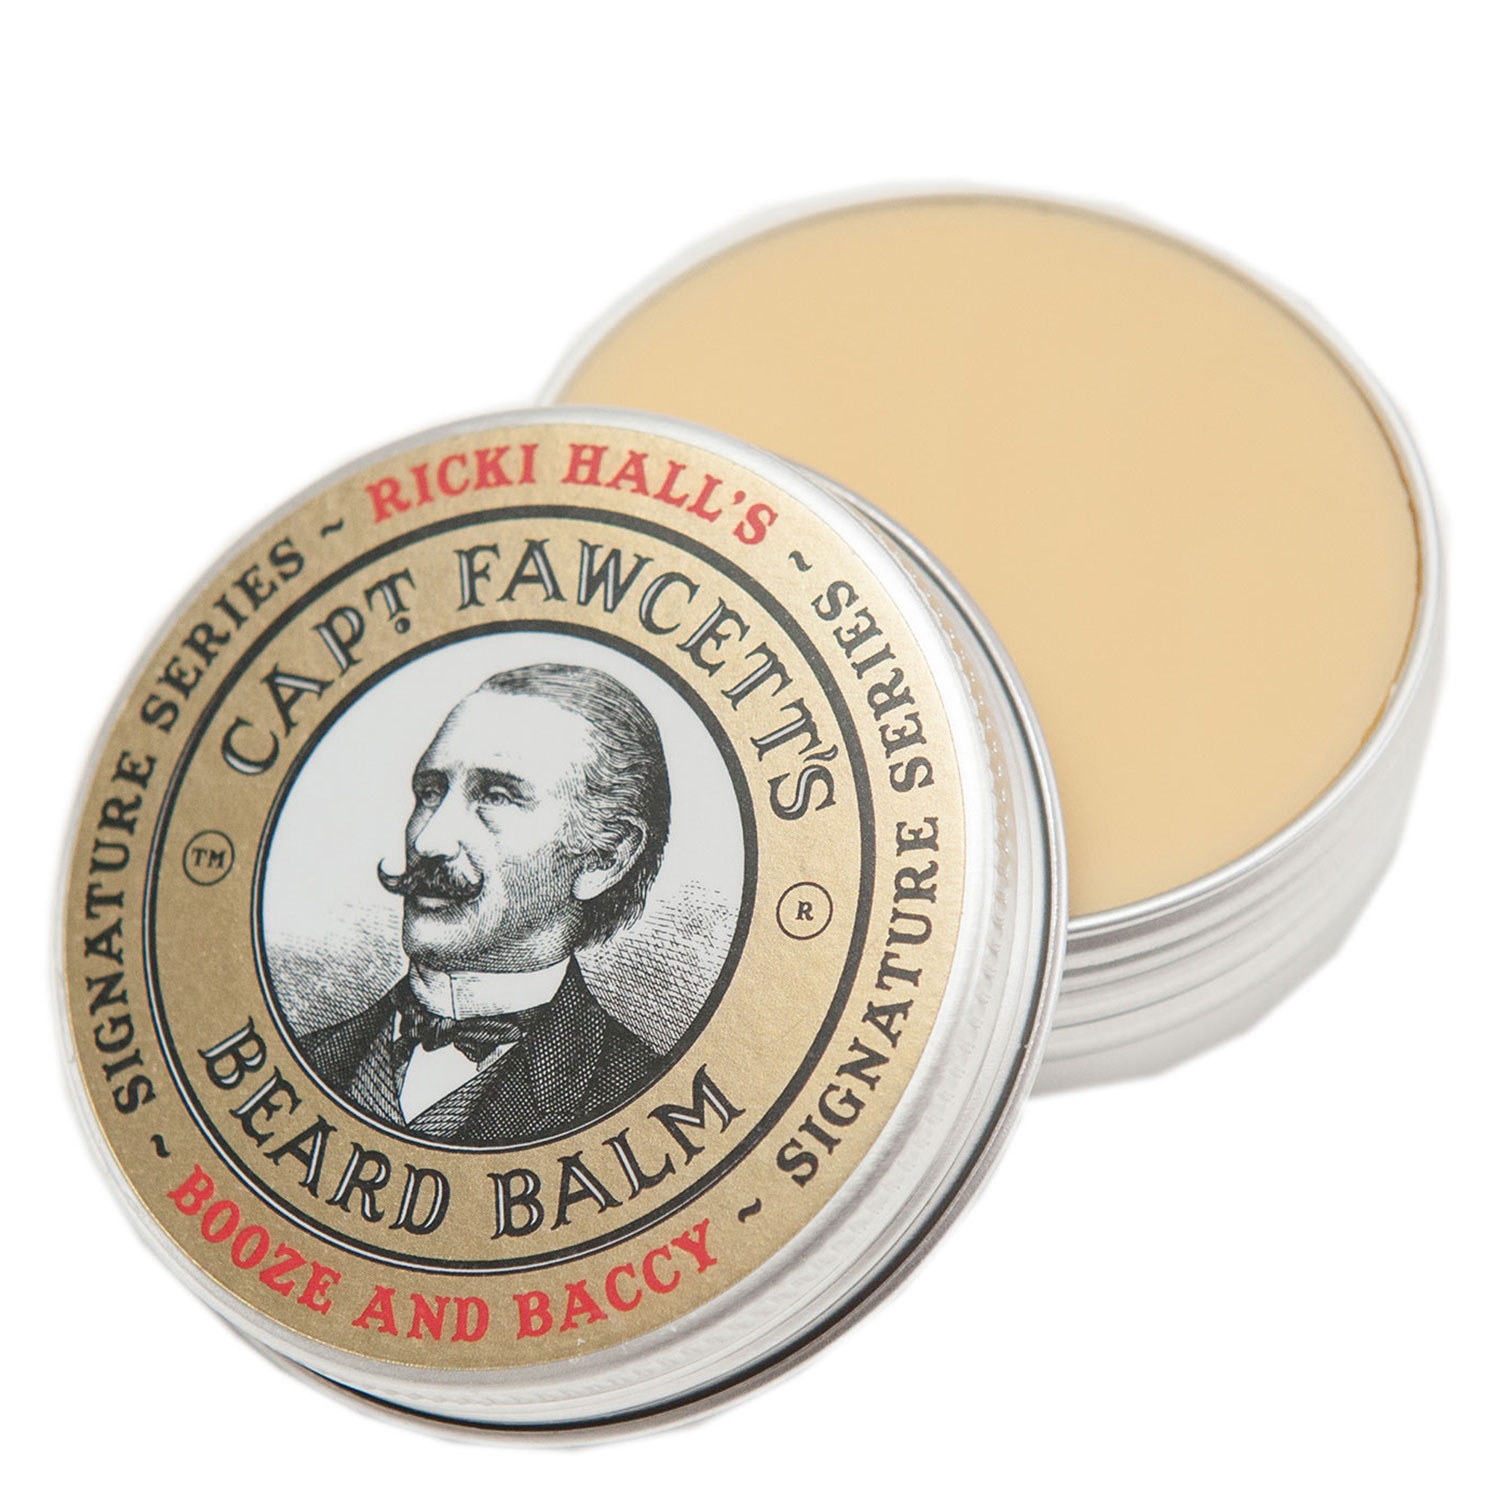 Product image from Capt. Fawcett Care - Ricki Hall's Booze & Baccy Beard Balm